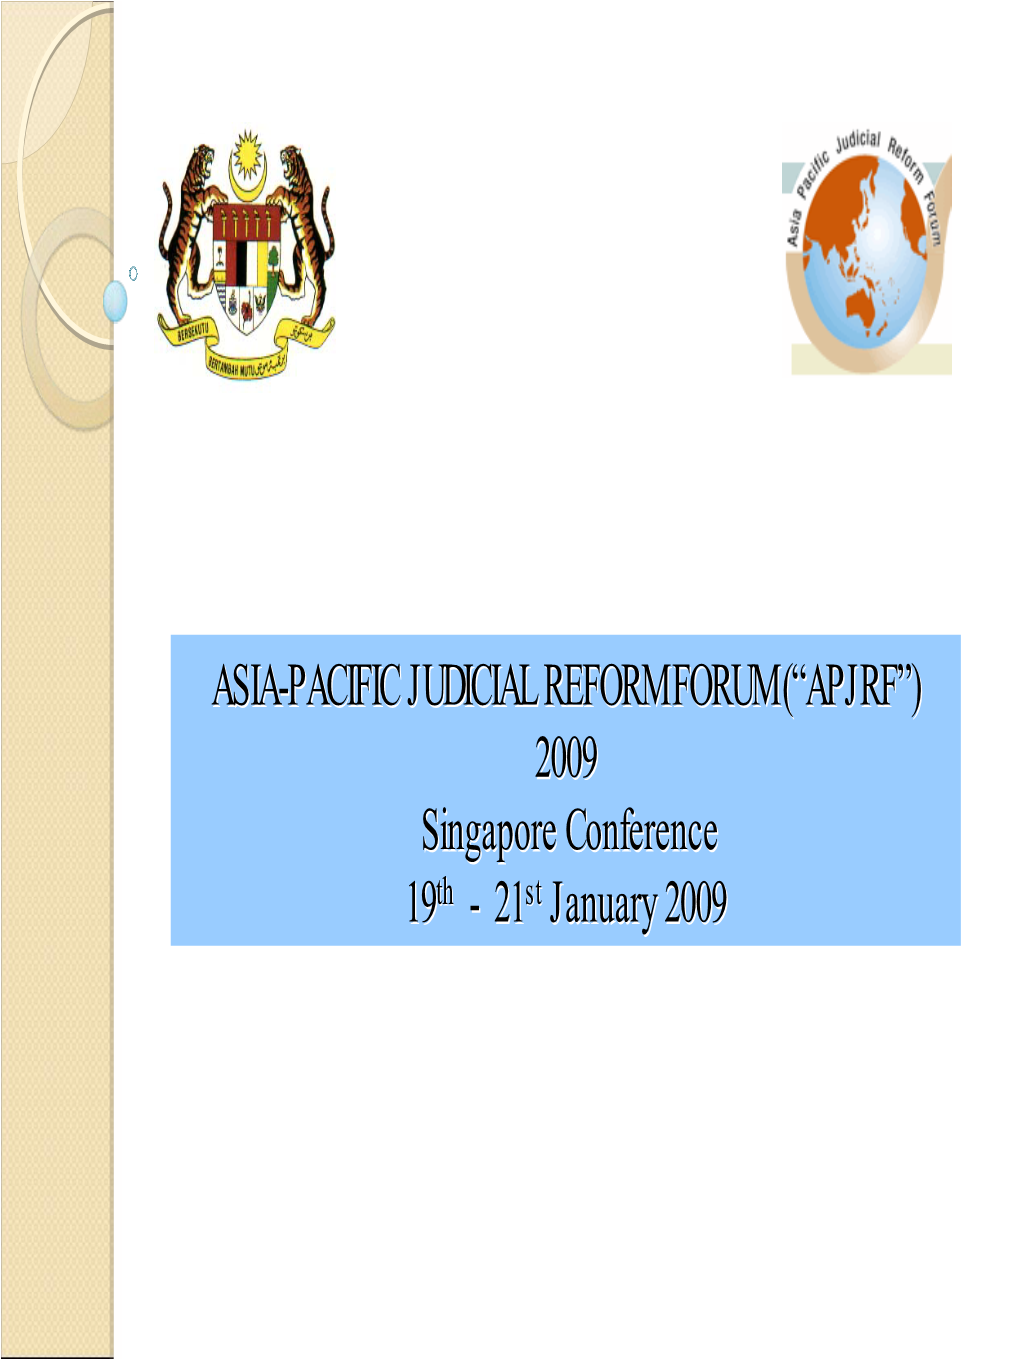 ASIA PACIFIC JUDICIAL REFORM FORUM Singapore Conference